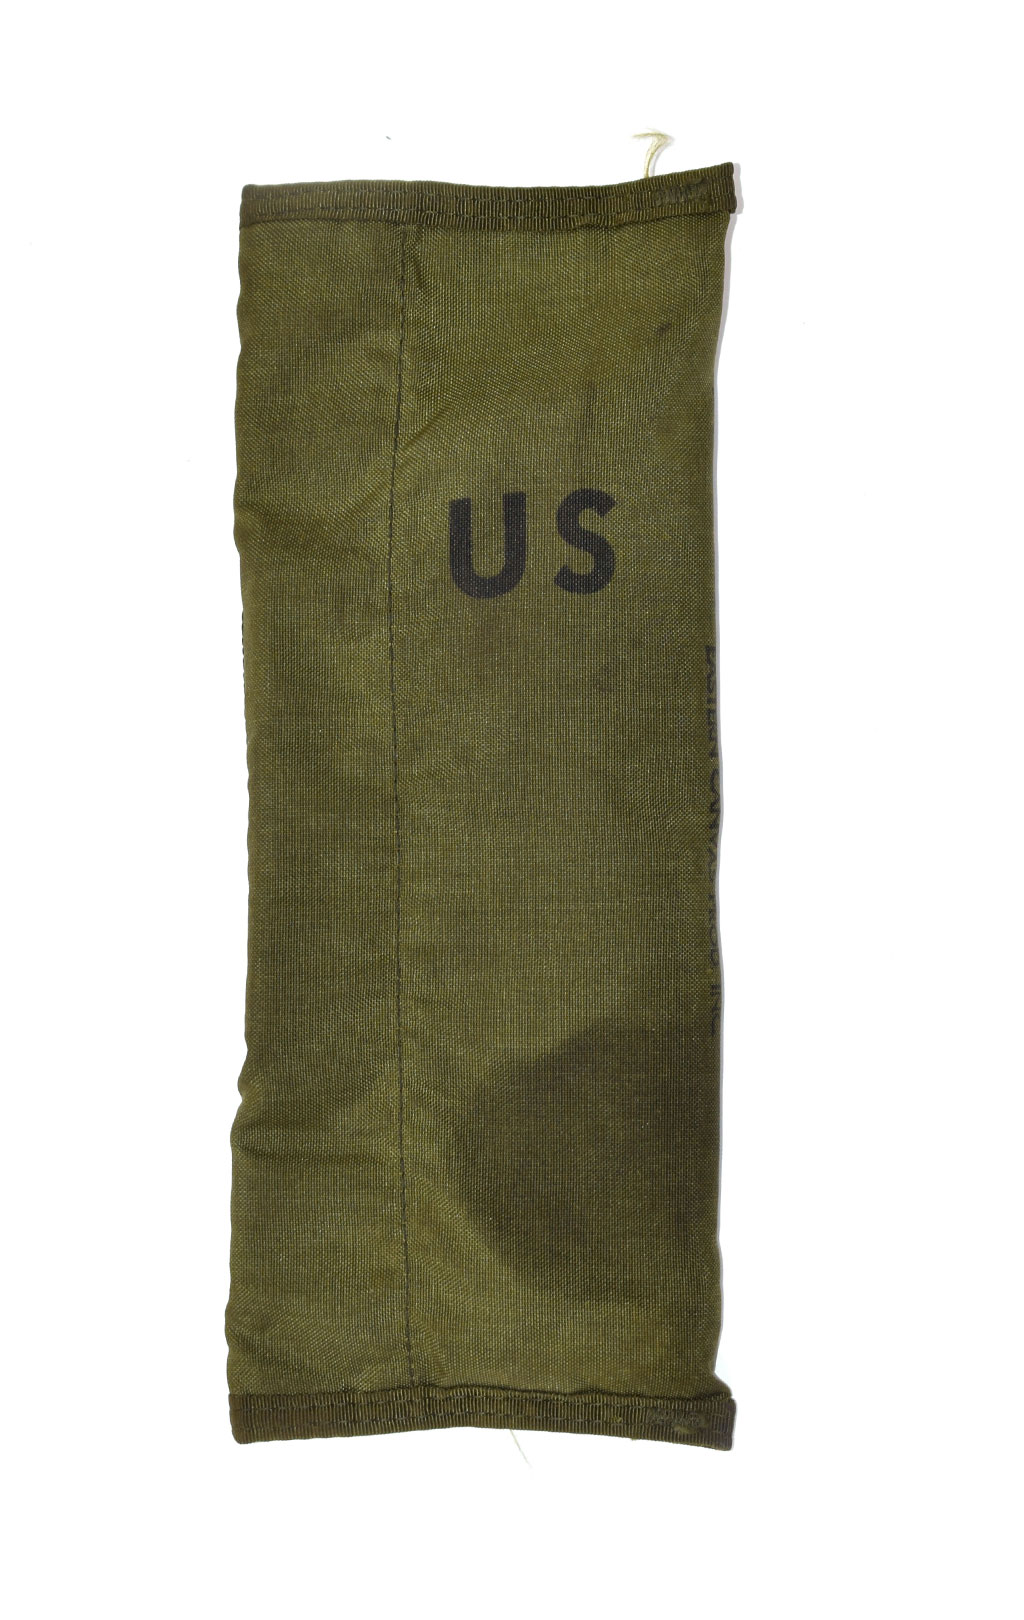 Набор для чистки оружия M16 olive США